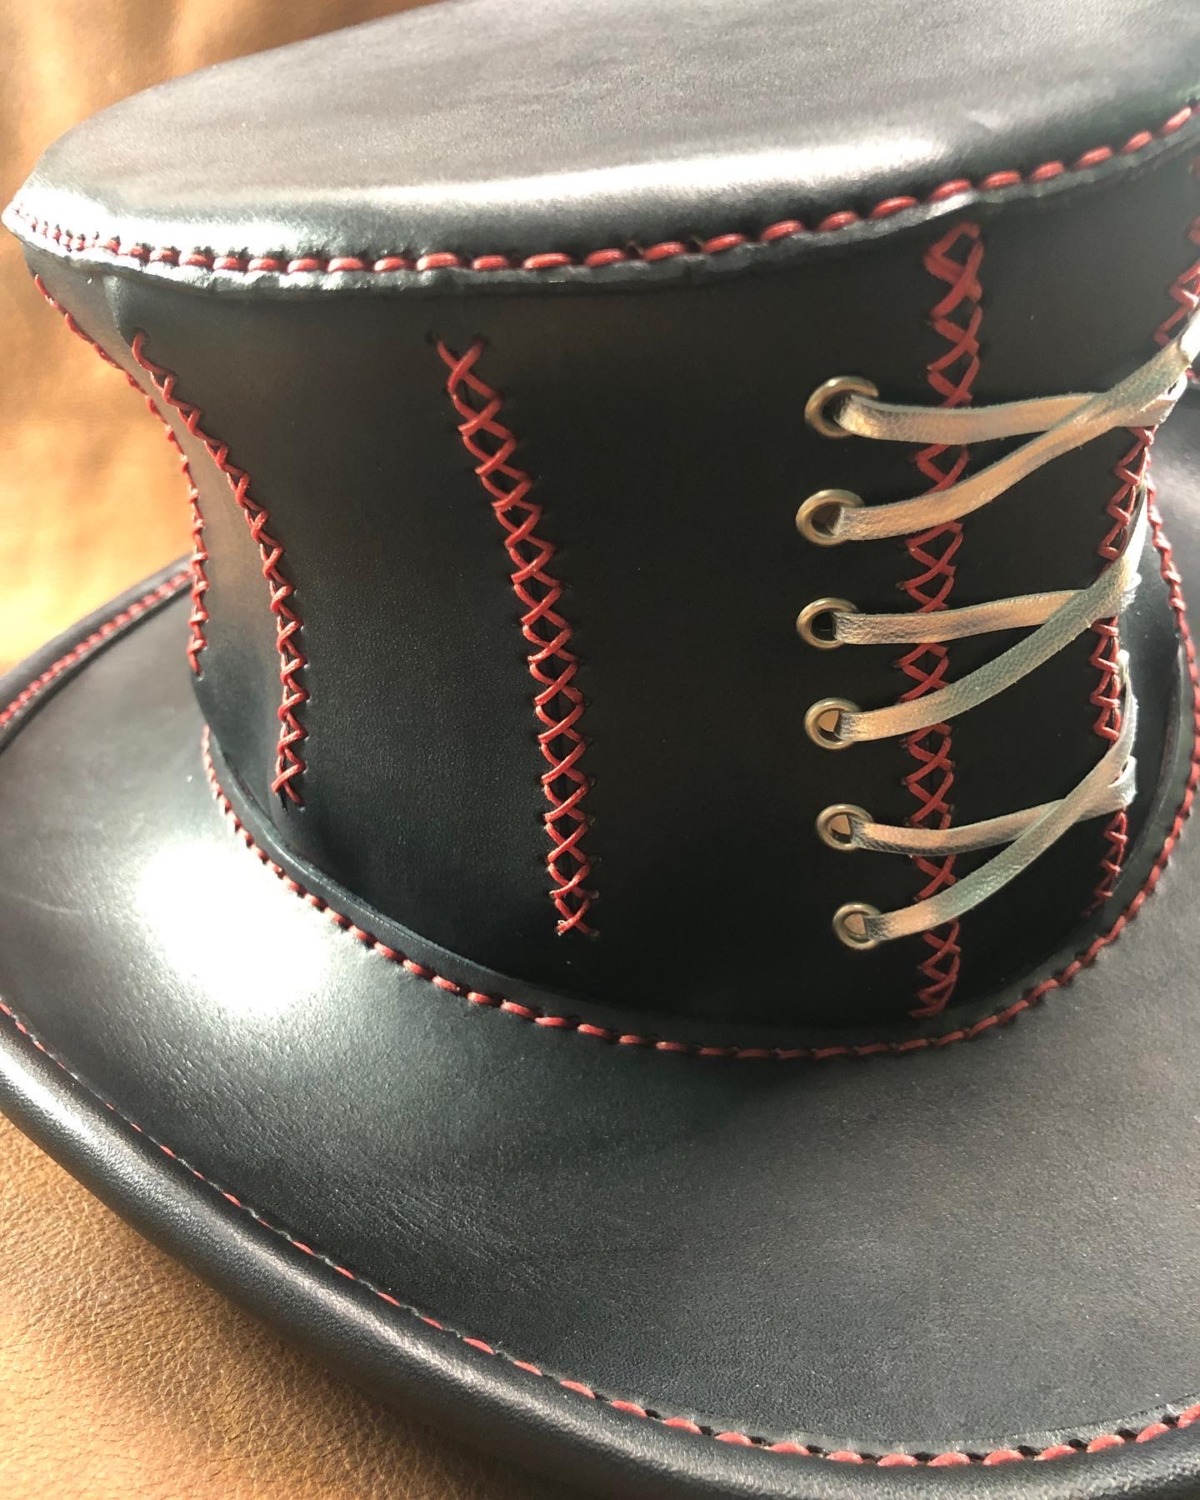 Home - McFarland Leather - Handmade Leather Gear